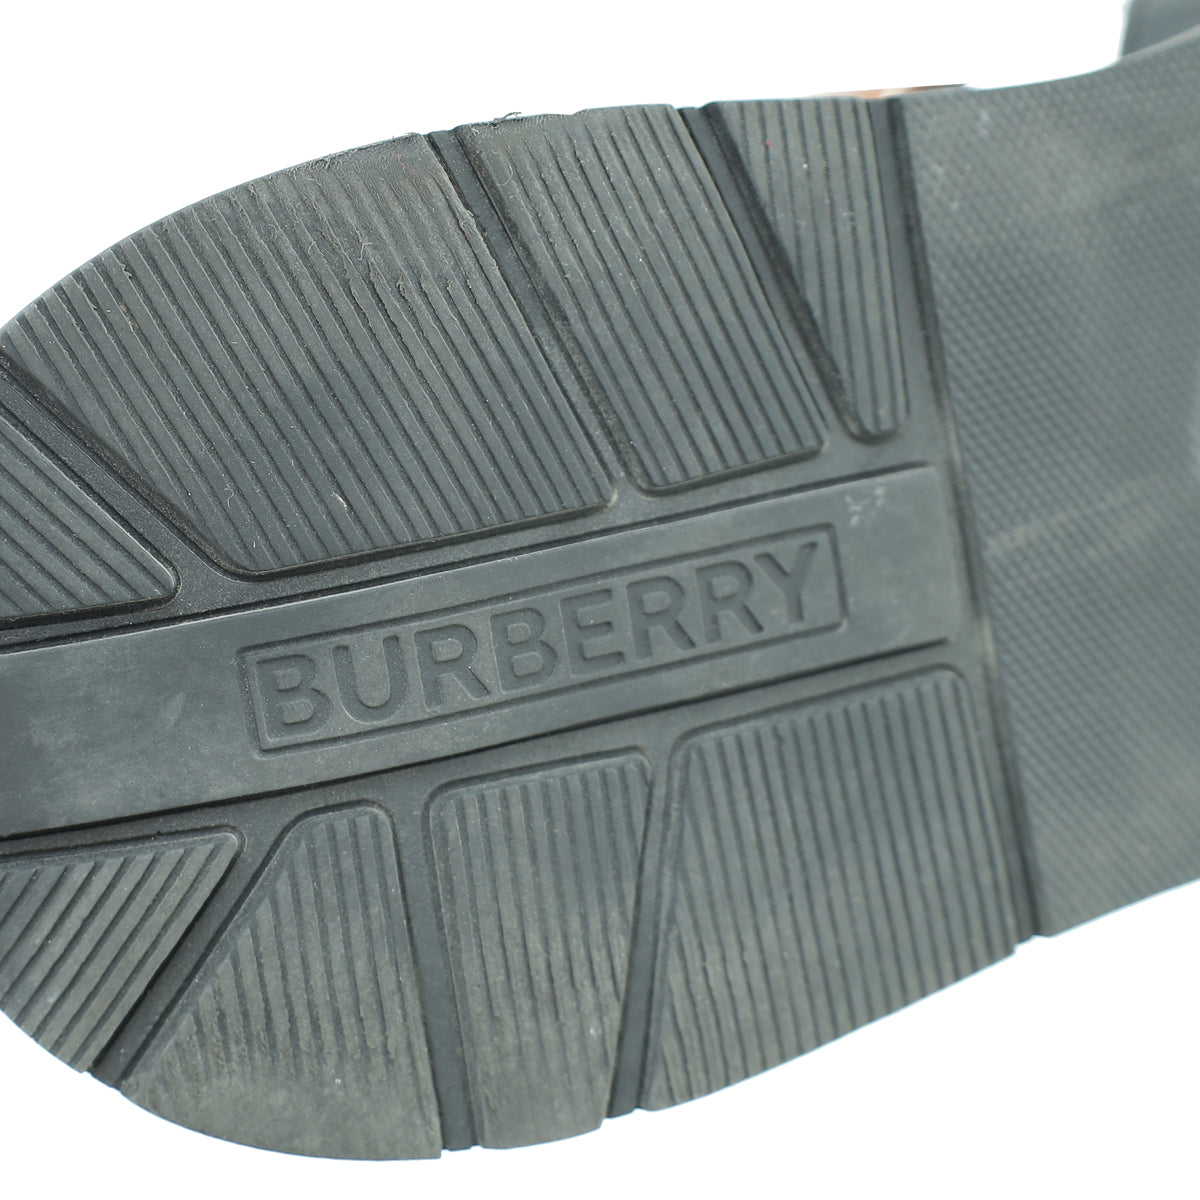 Burberry Multicolor Check Regis Sneakers 42